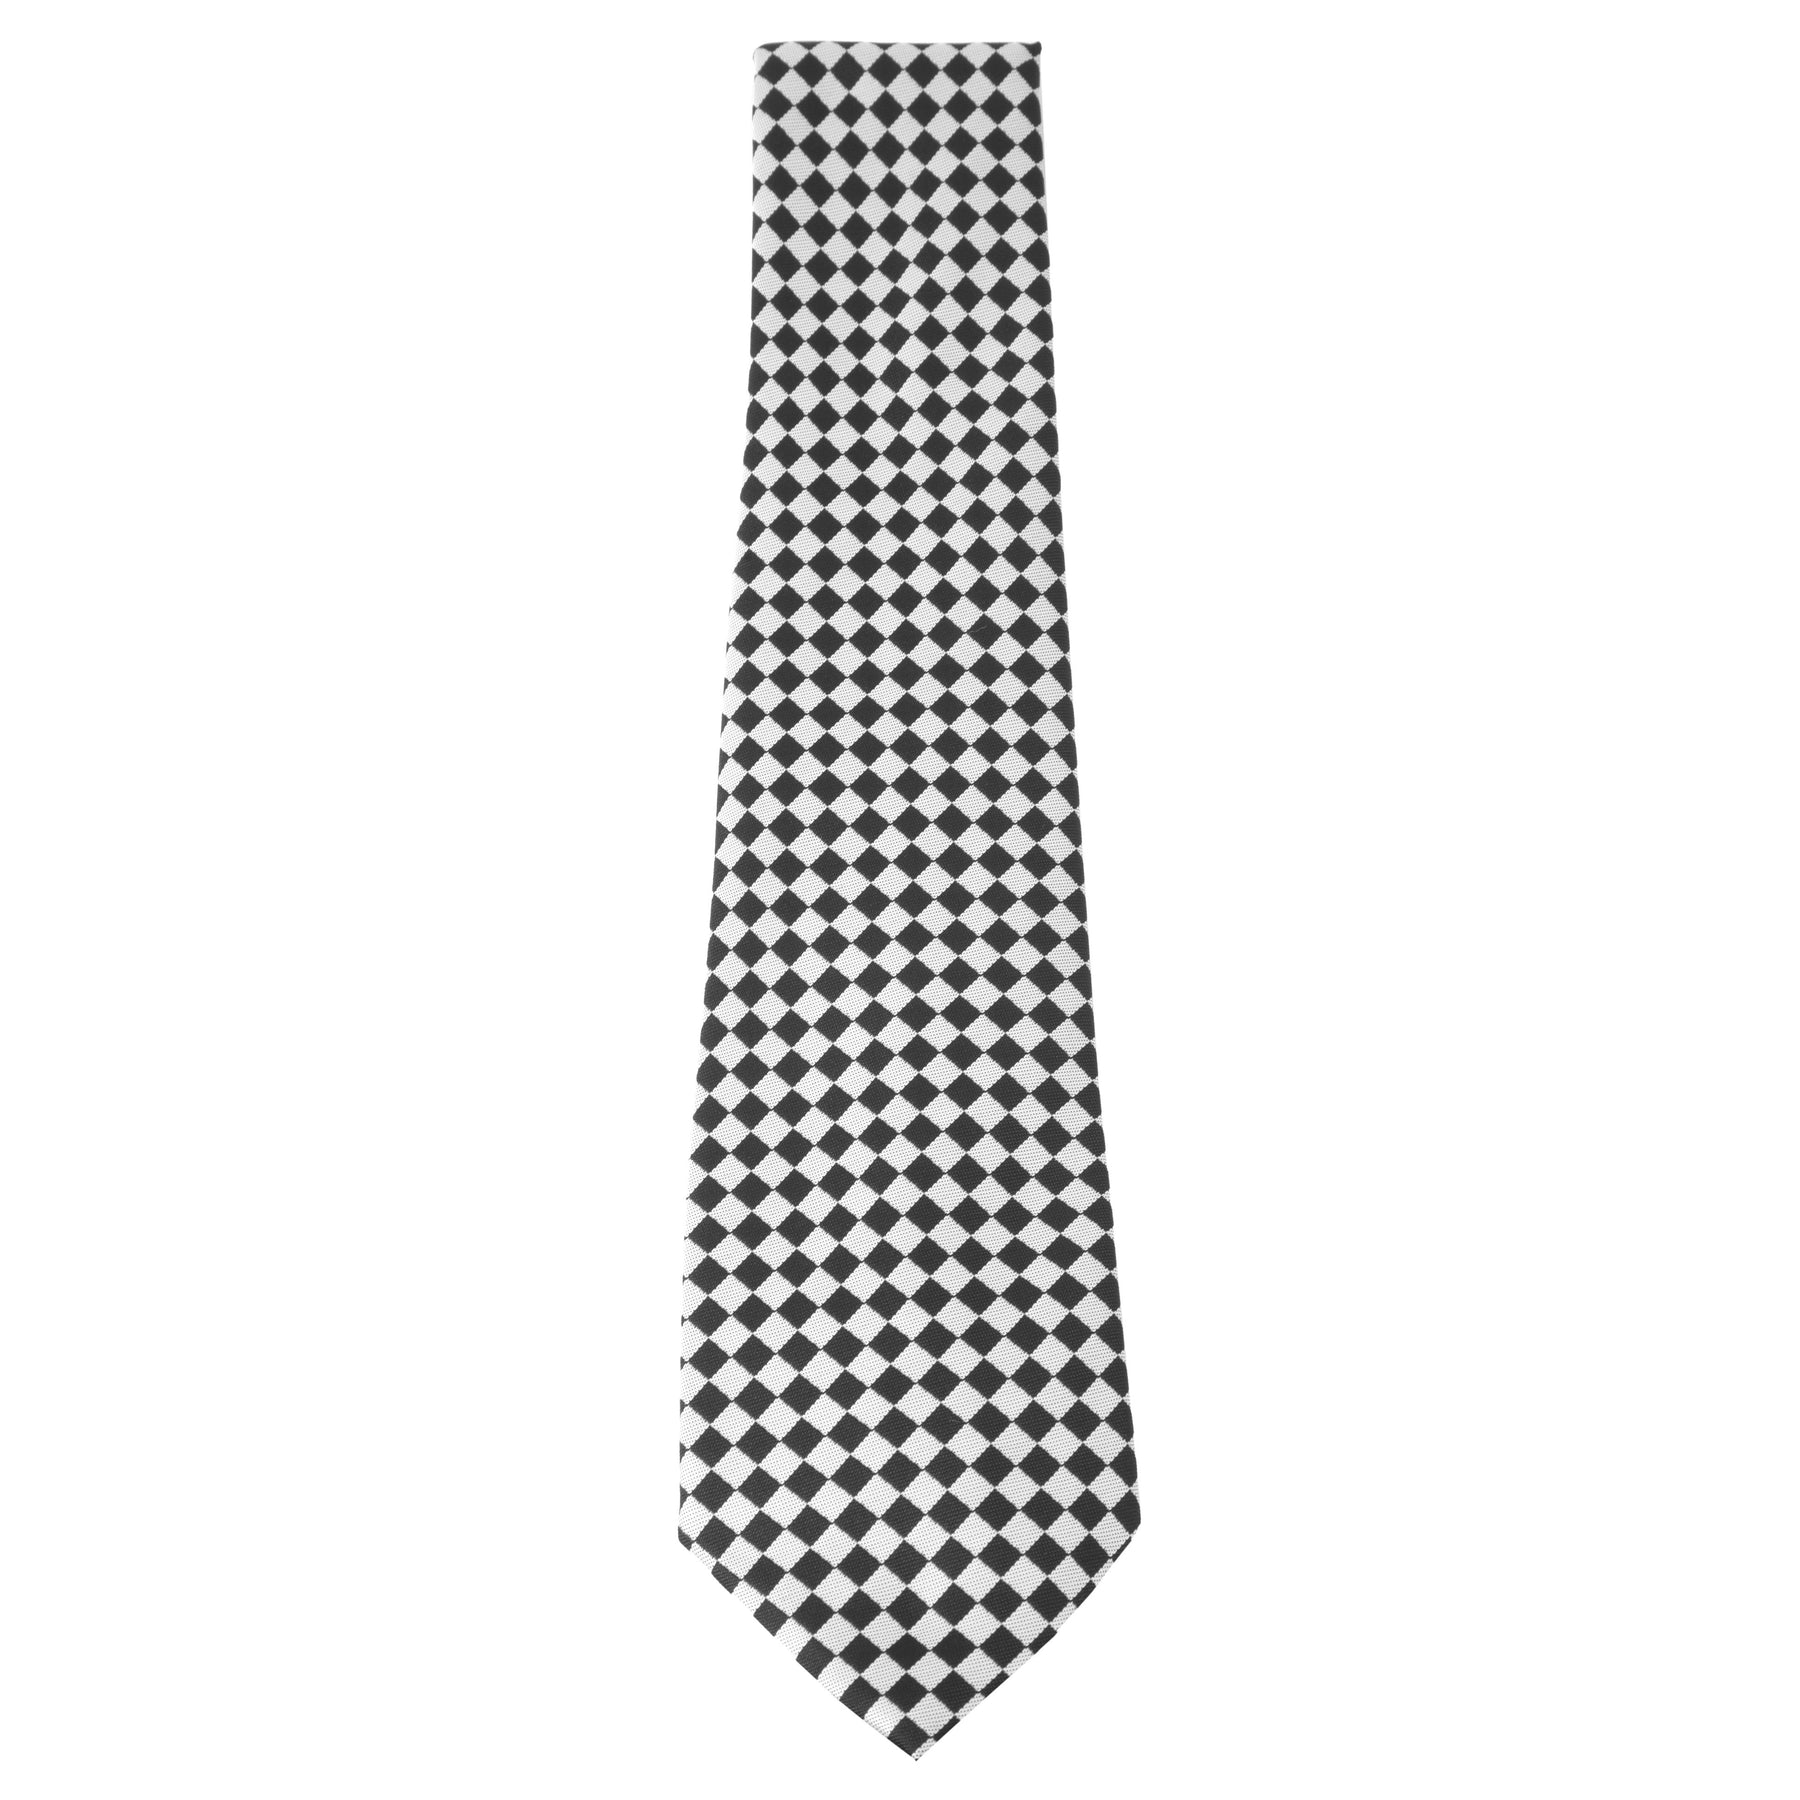 Masonic Necktie - Black & White Checkered Pattern - Bricks Masons